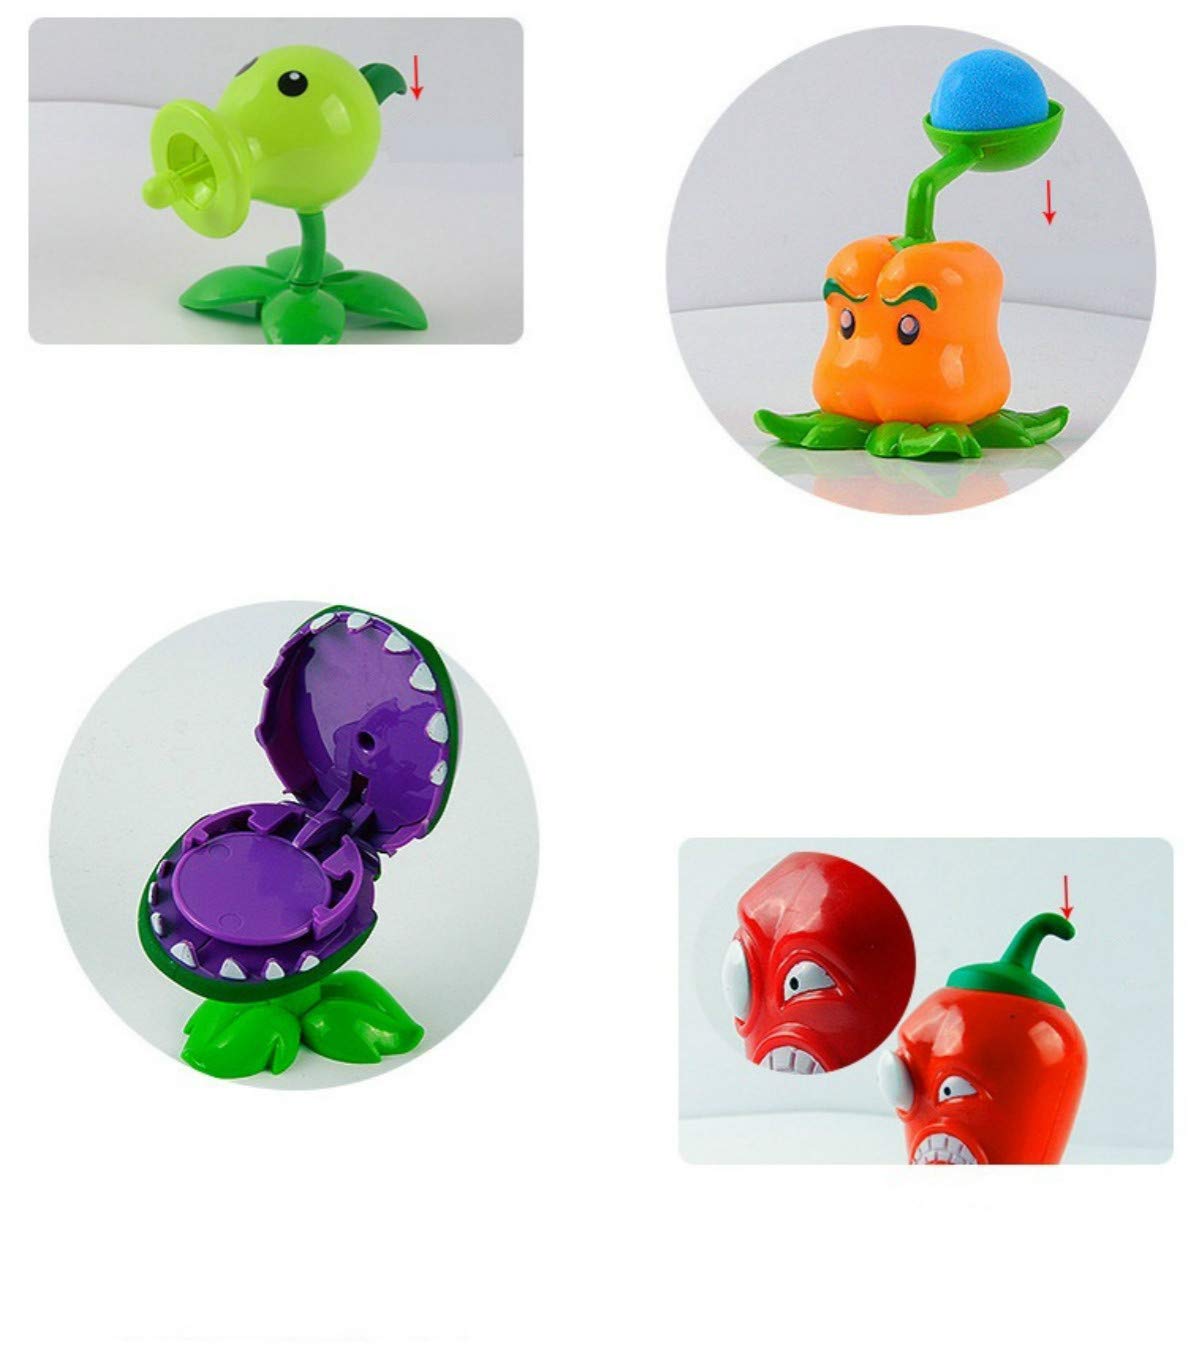 heya 2018 New Toys Popular Games PVZ Plants Vs Zombies Peashooter Plastic Action Figures Model Toys Mini Plants Vs. Zombies Toys